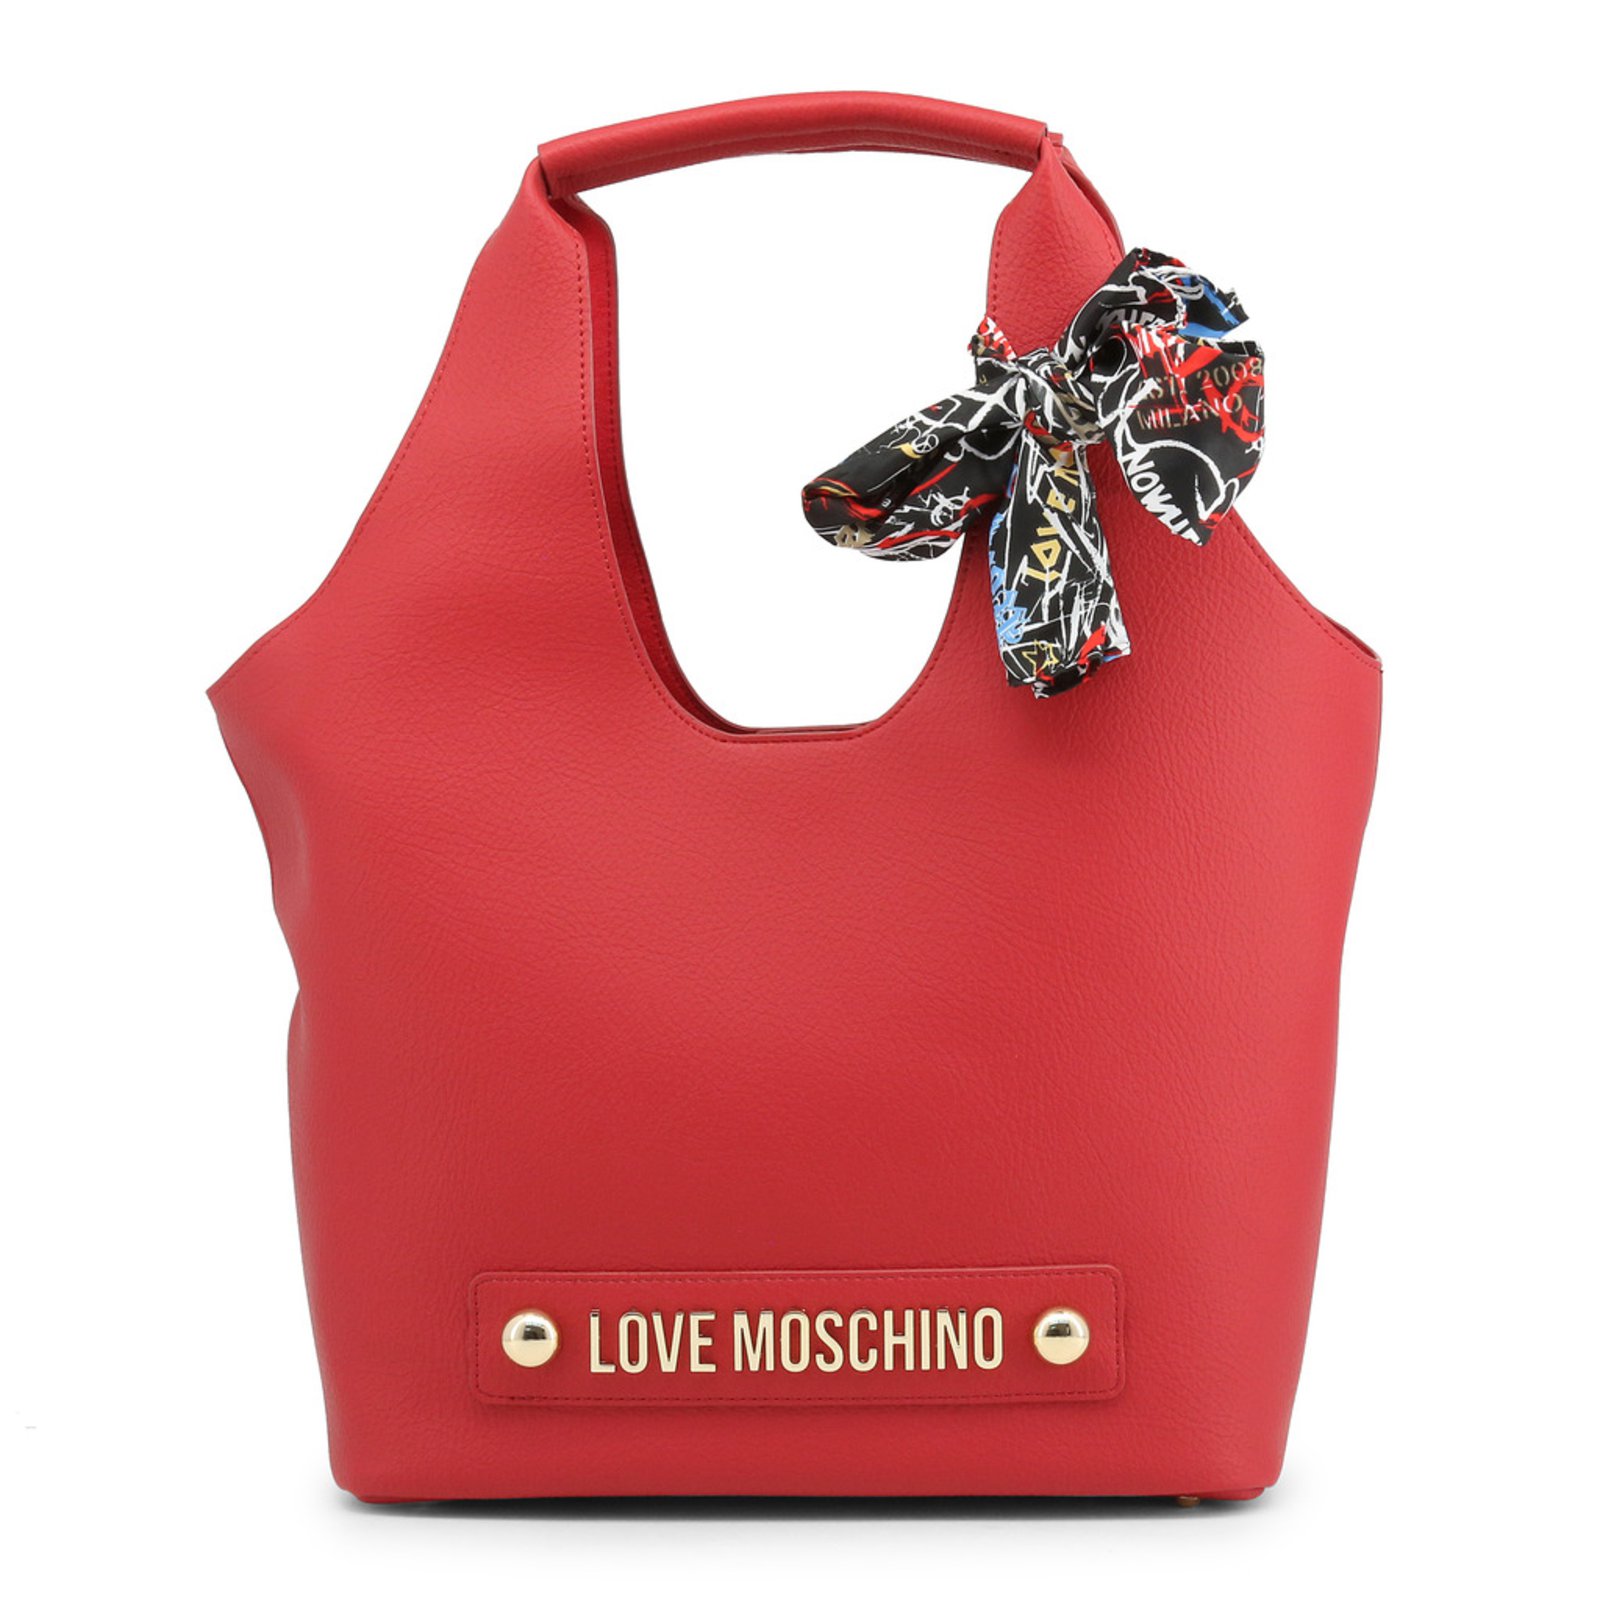 Дама лов. Love Moschino сумка (Хобо). Красная сумка нейлон Love Moschino jc4303. Moschino 4153 Red Bag 2019. Сумка Москино красная.